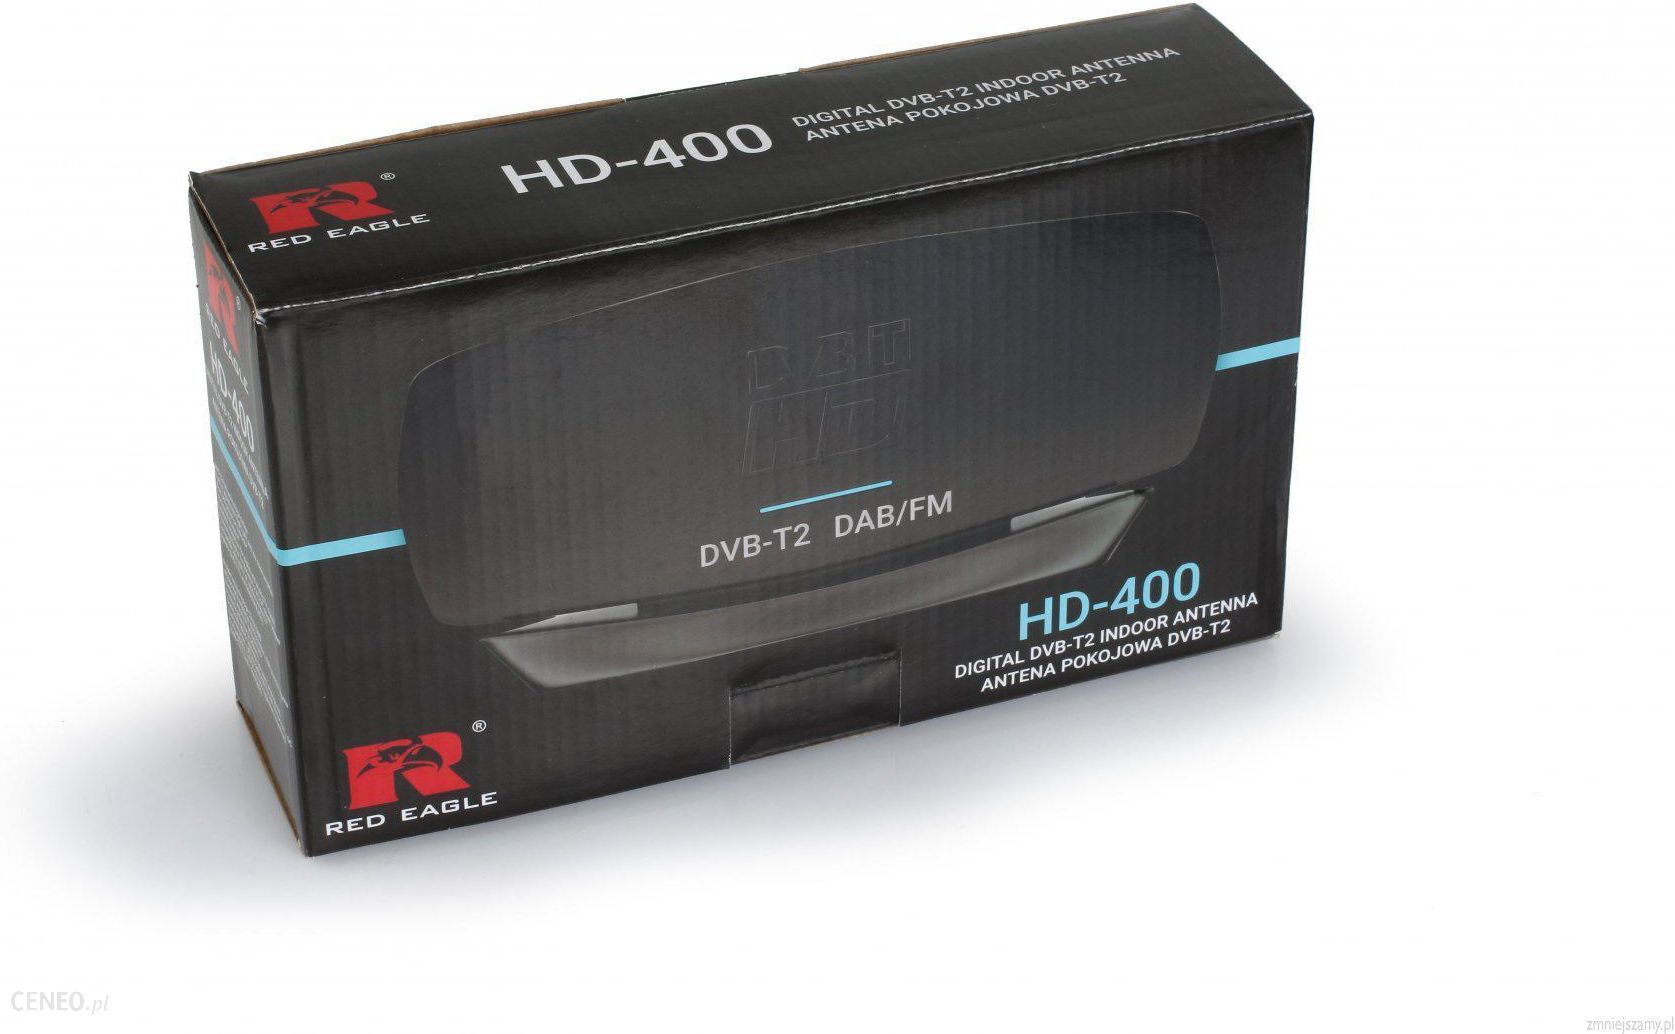 Red Eagle Antena pokojowa DVB-T2 HD-400 (HD400)